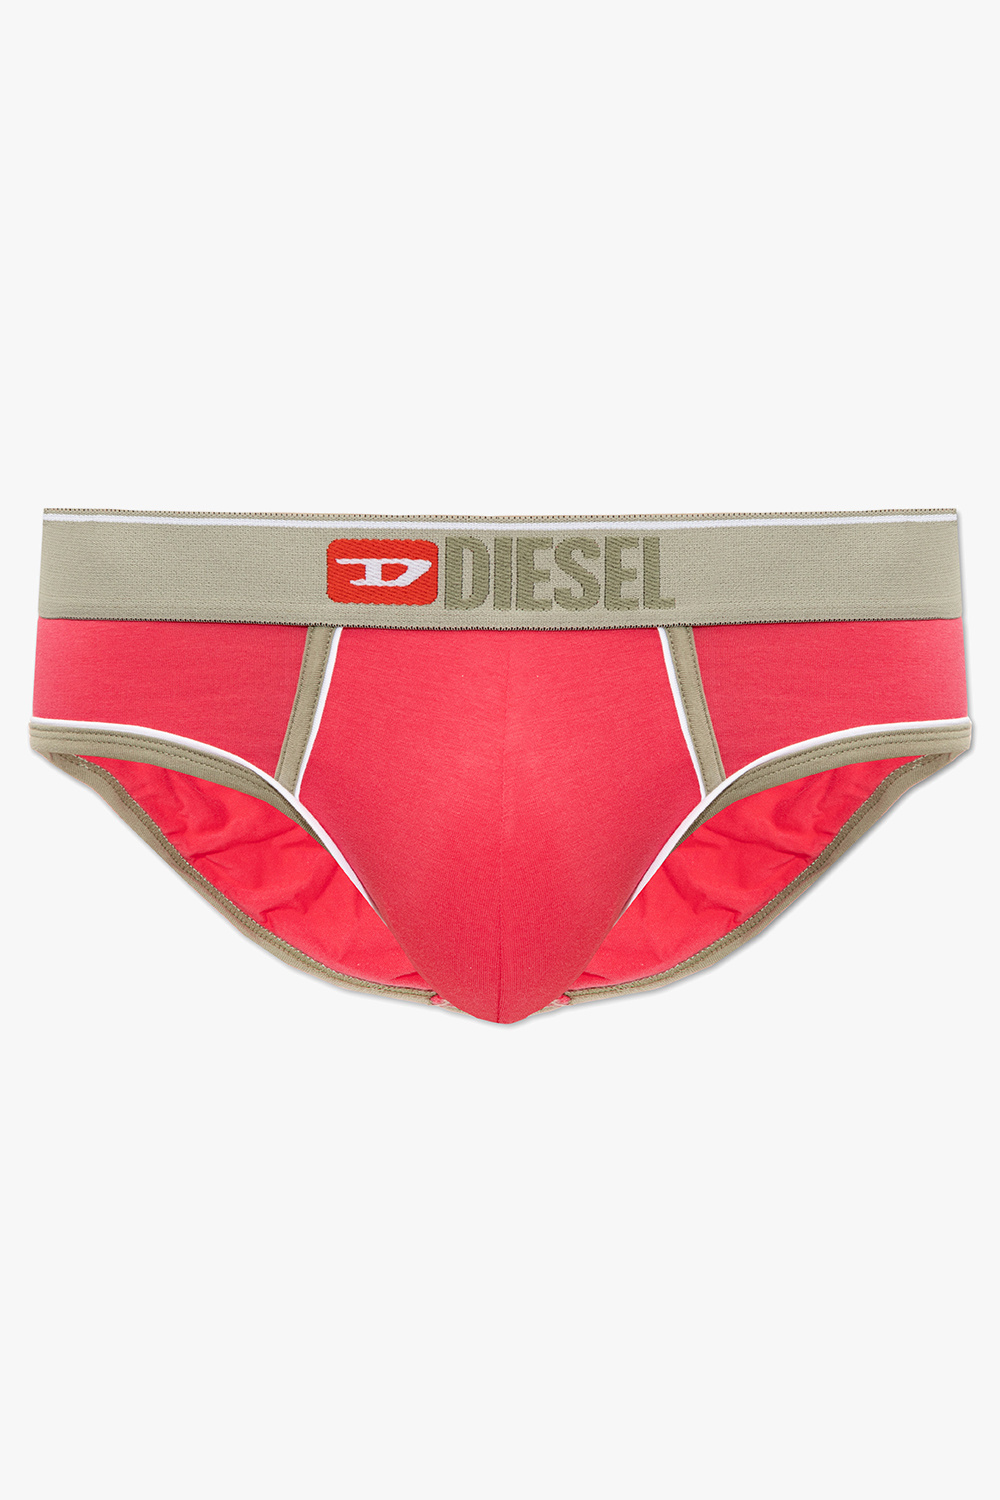 Pink ‘UMBR-ANDRE’ briefs with logo Diesel - Vitkac GB